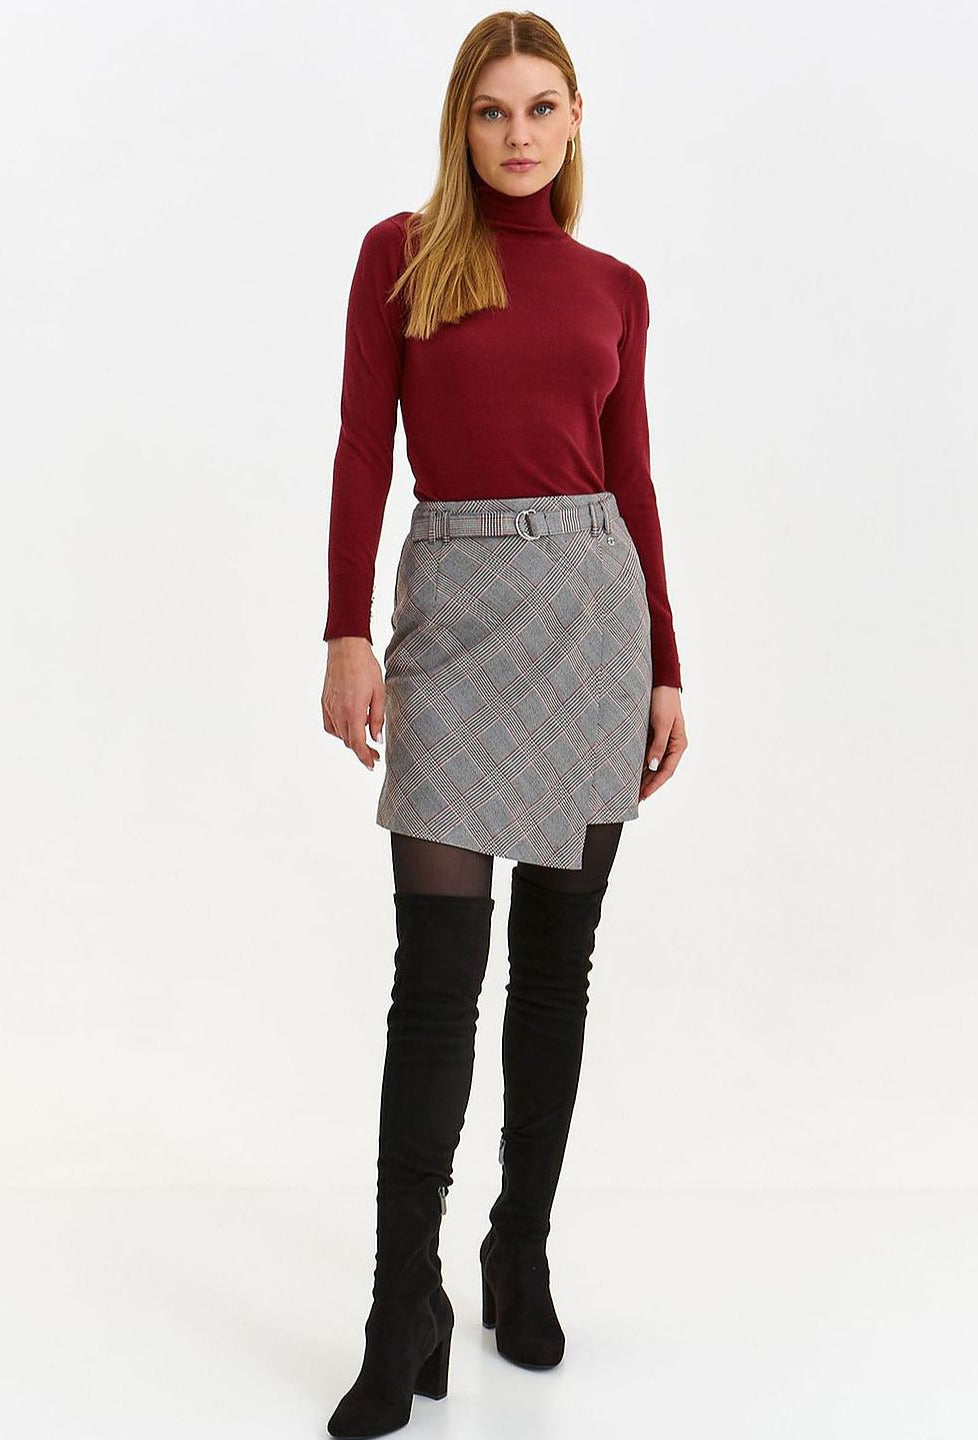 Elegant mid-thigh length check pattern pencil skirt